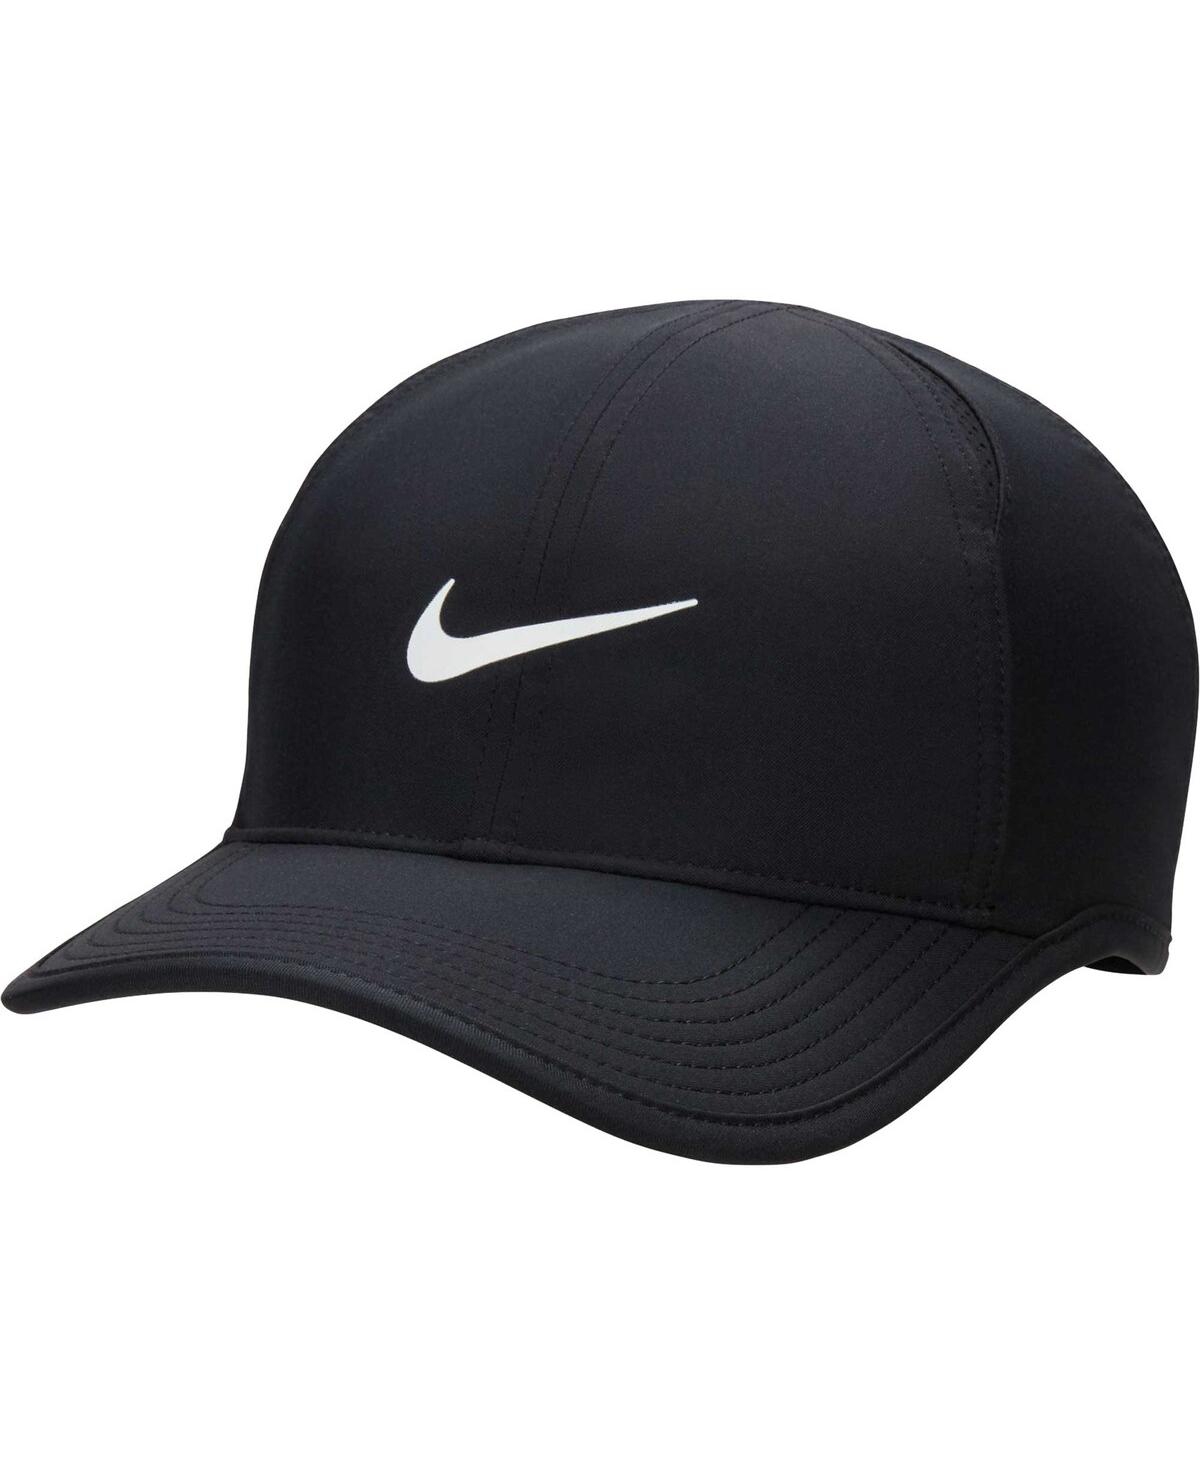 Nike Men's And Women's  Black Featherlight Club Performance Adjustable Hat